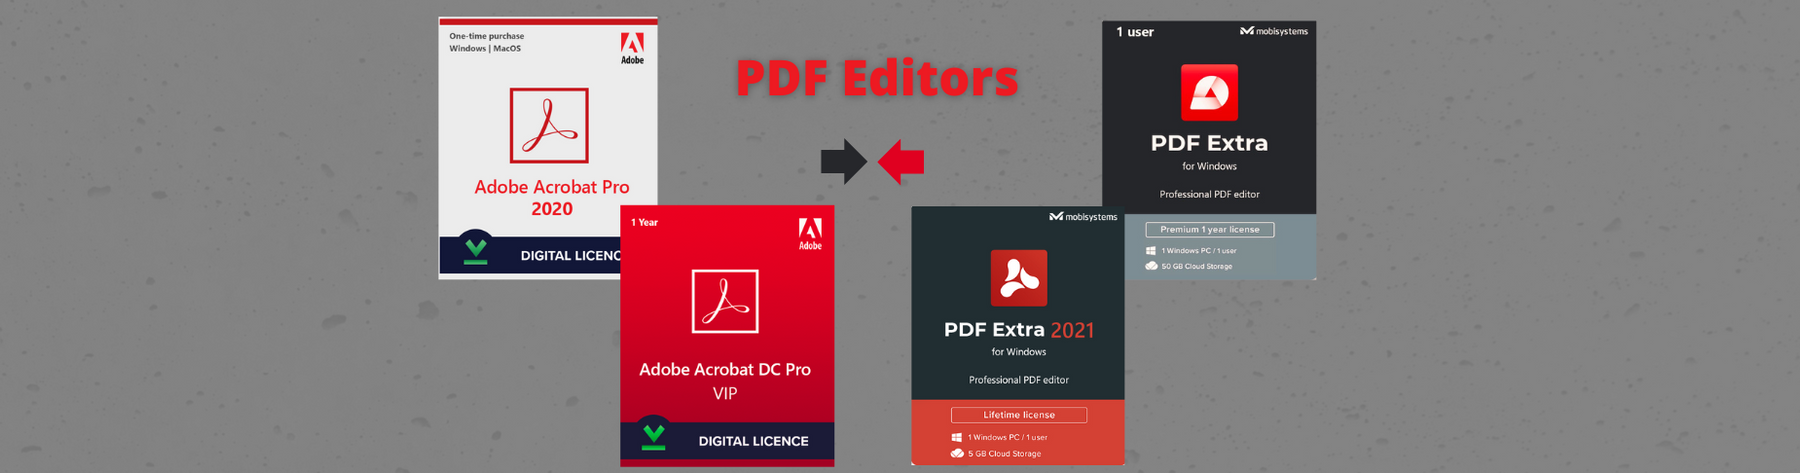 Adobe Acrobat Pro and PDF Extra Comparison